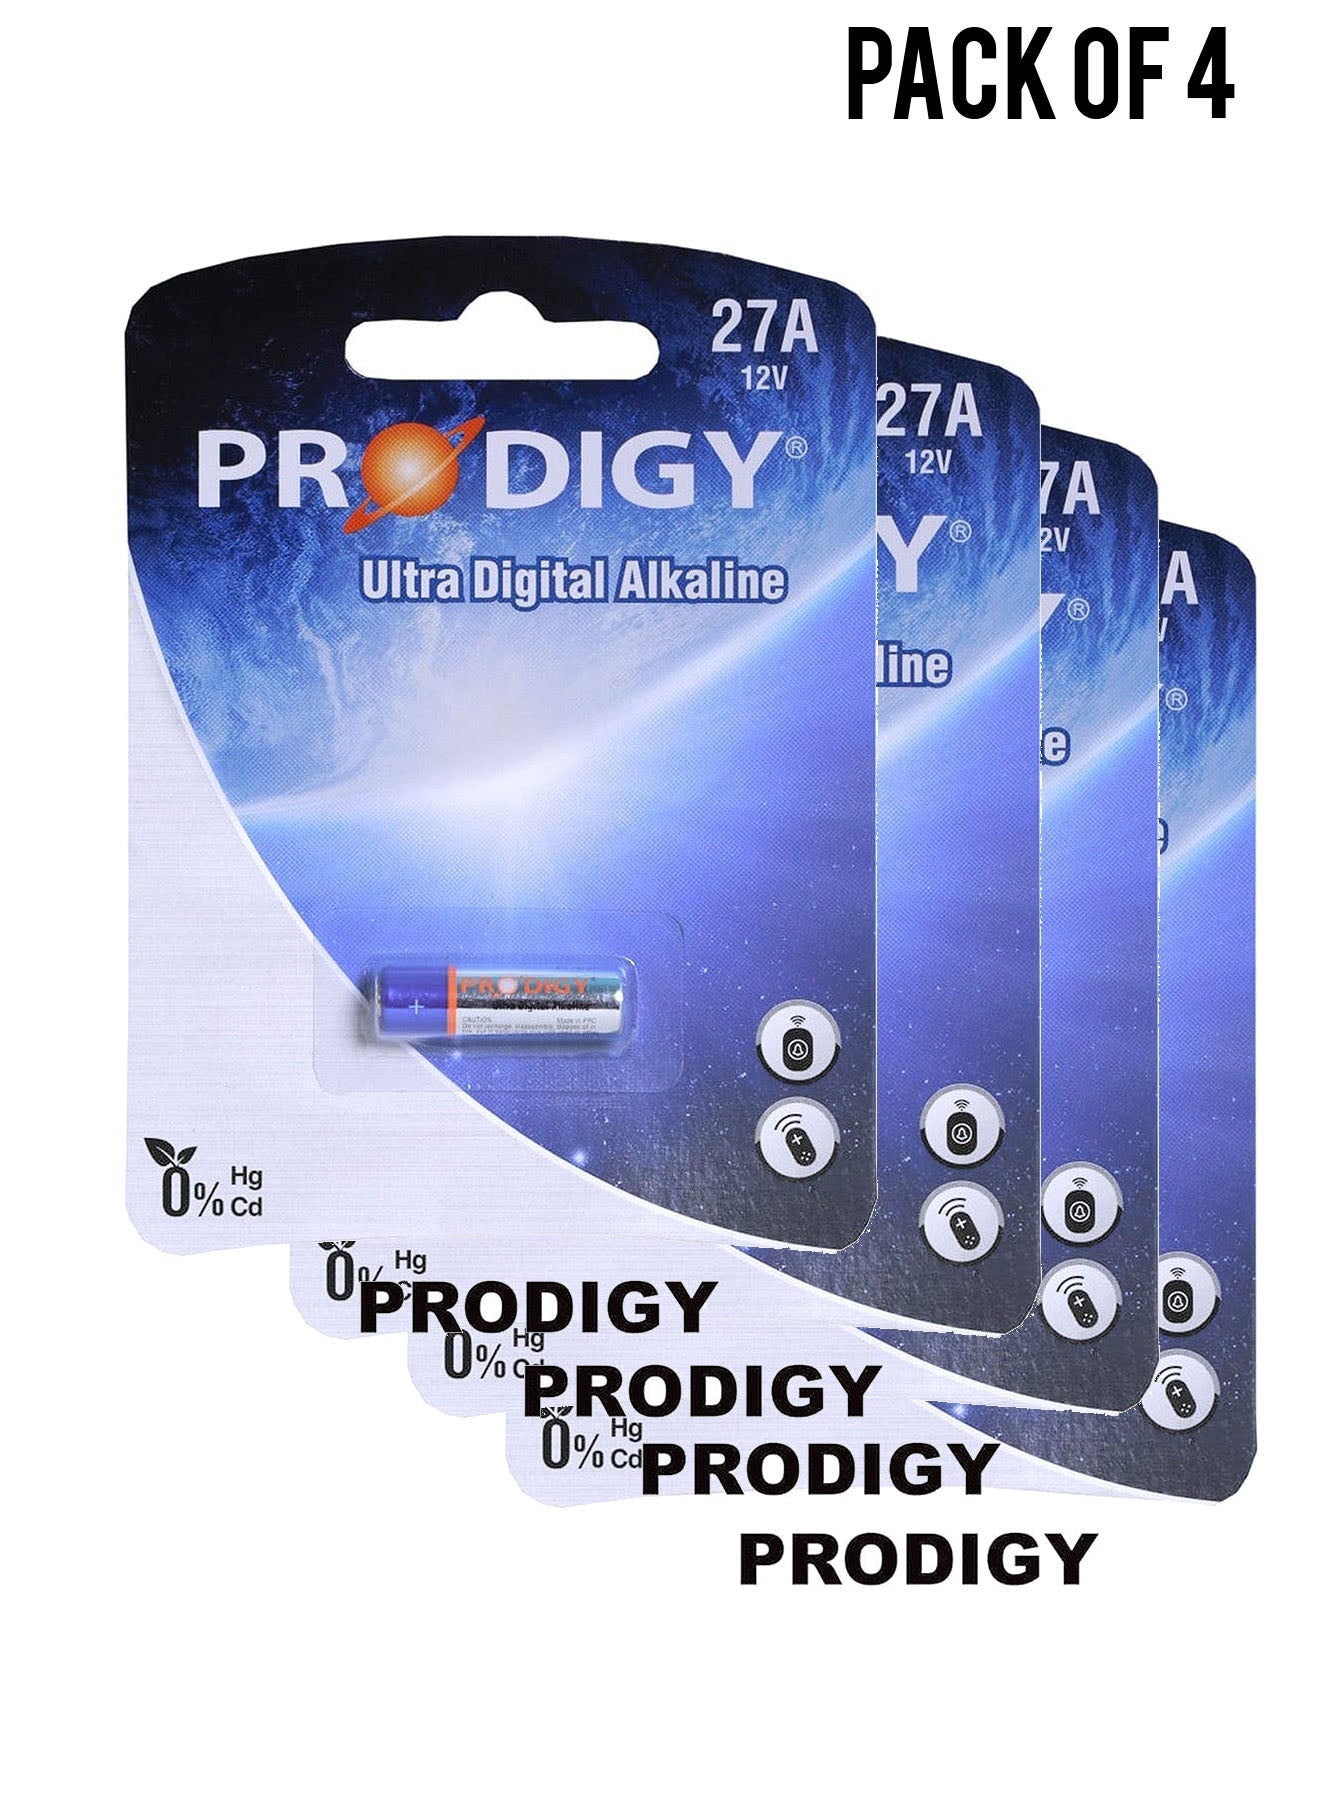 Prodigy Alkaline 27A 12V Value Pack of 4 